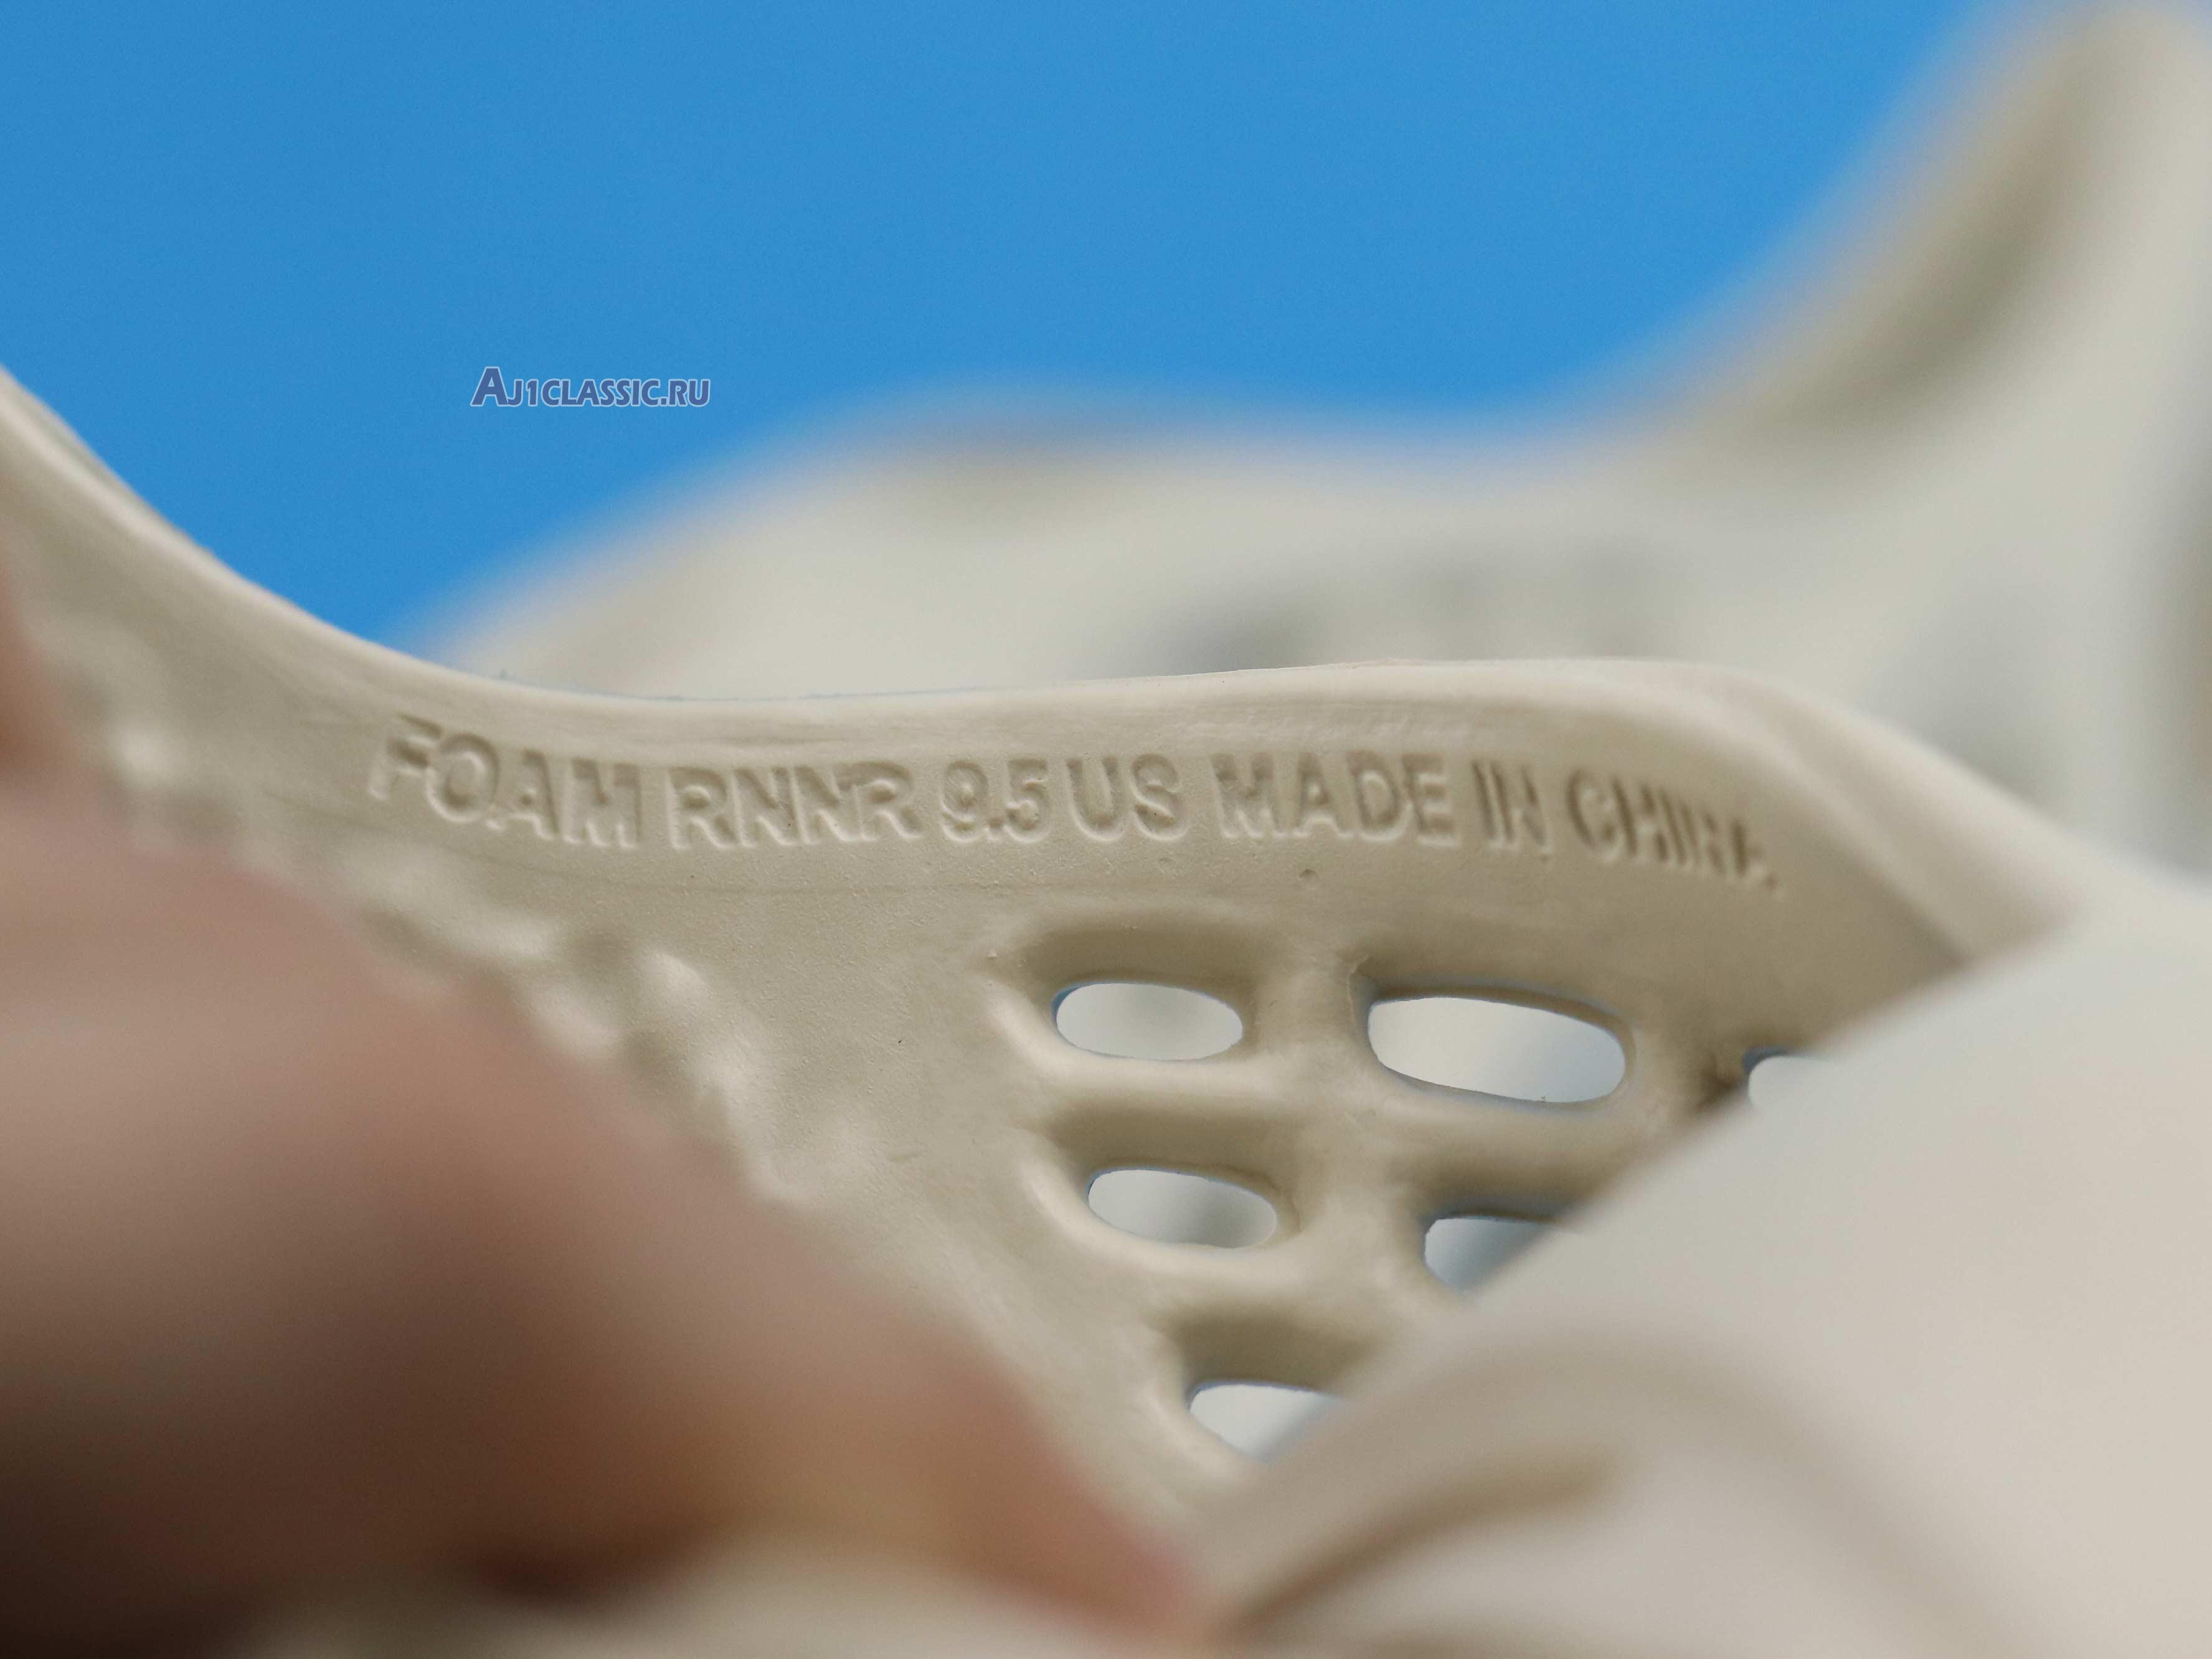 Adidas Yeezy Foam Runner "Sand" FY4567